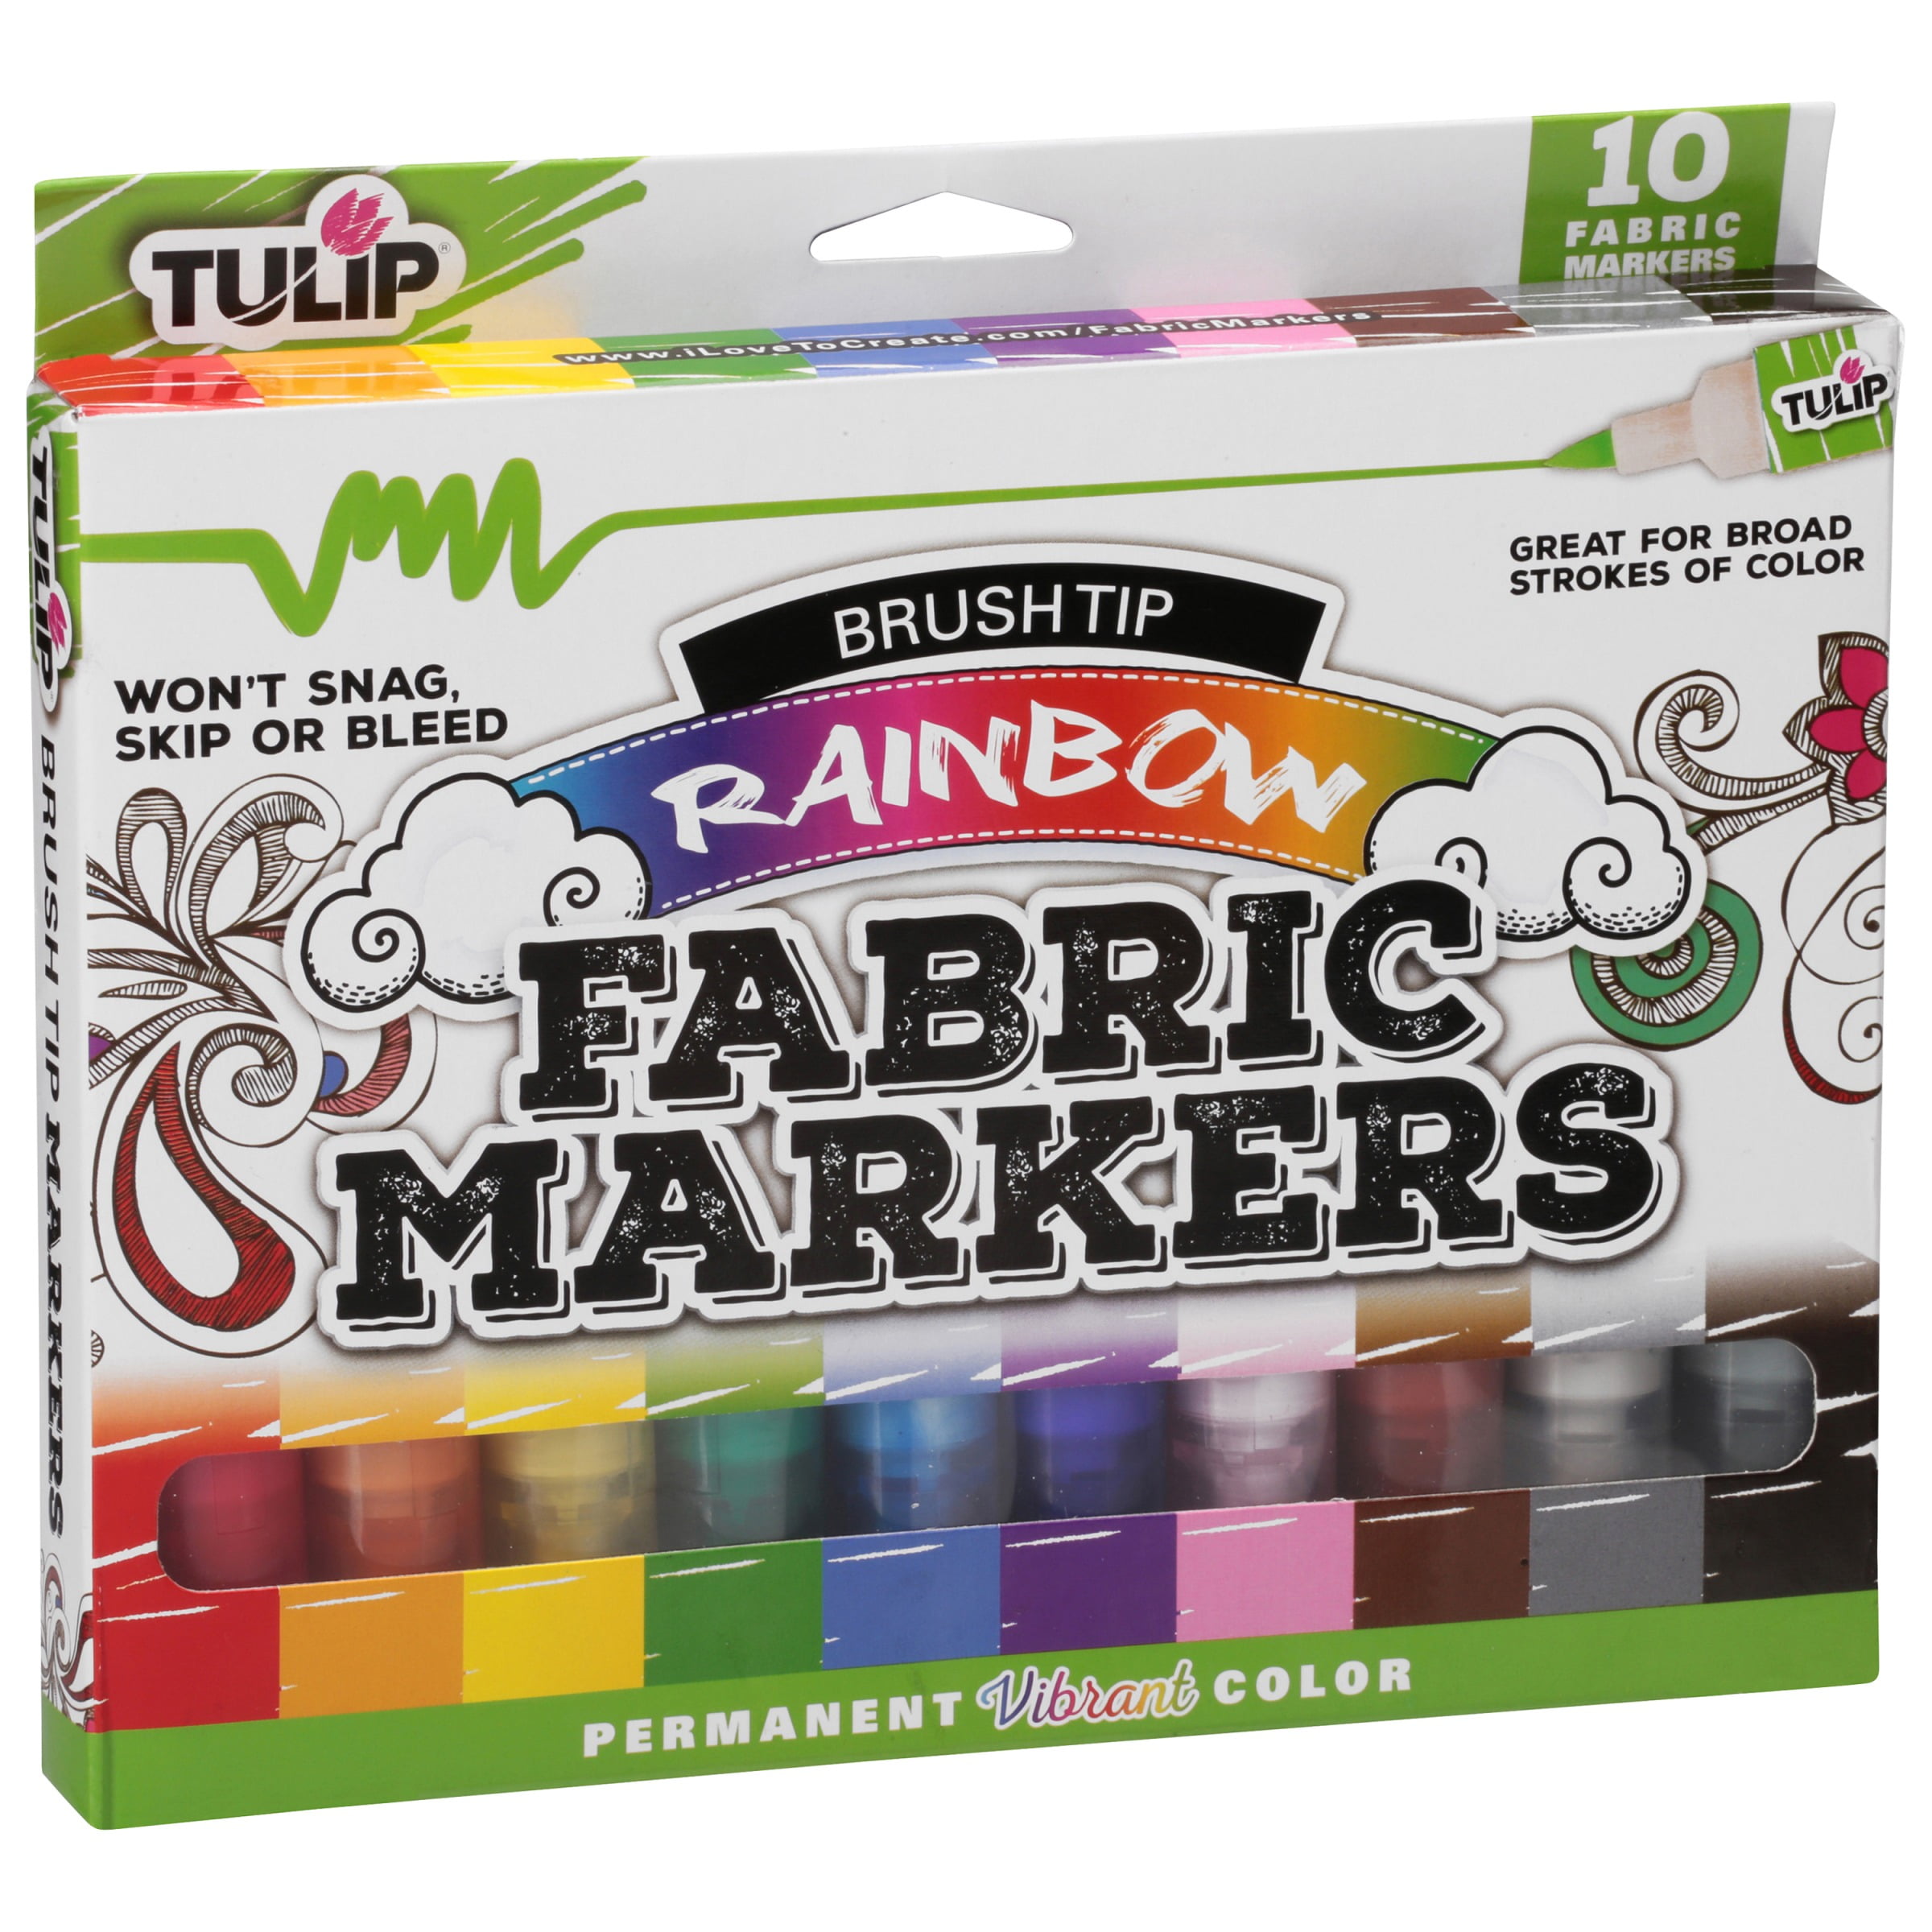 Tulip Fabric Watercolor Markers 8/Pkg Rainbow